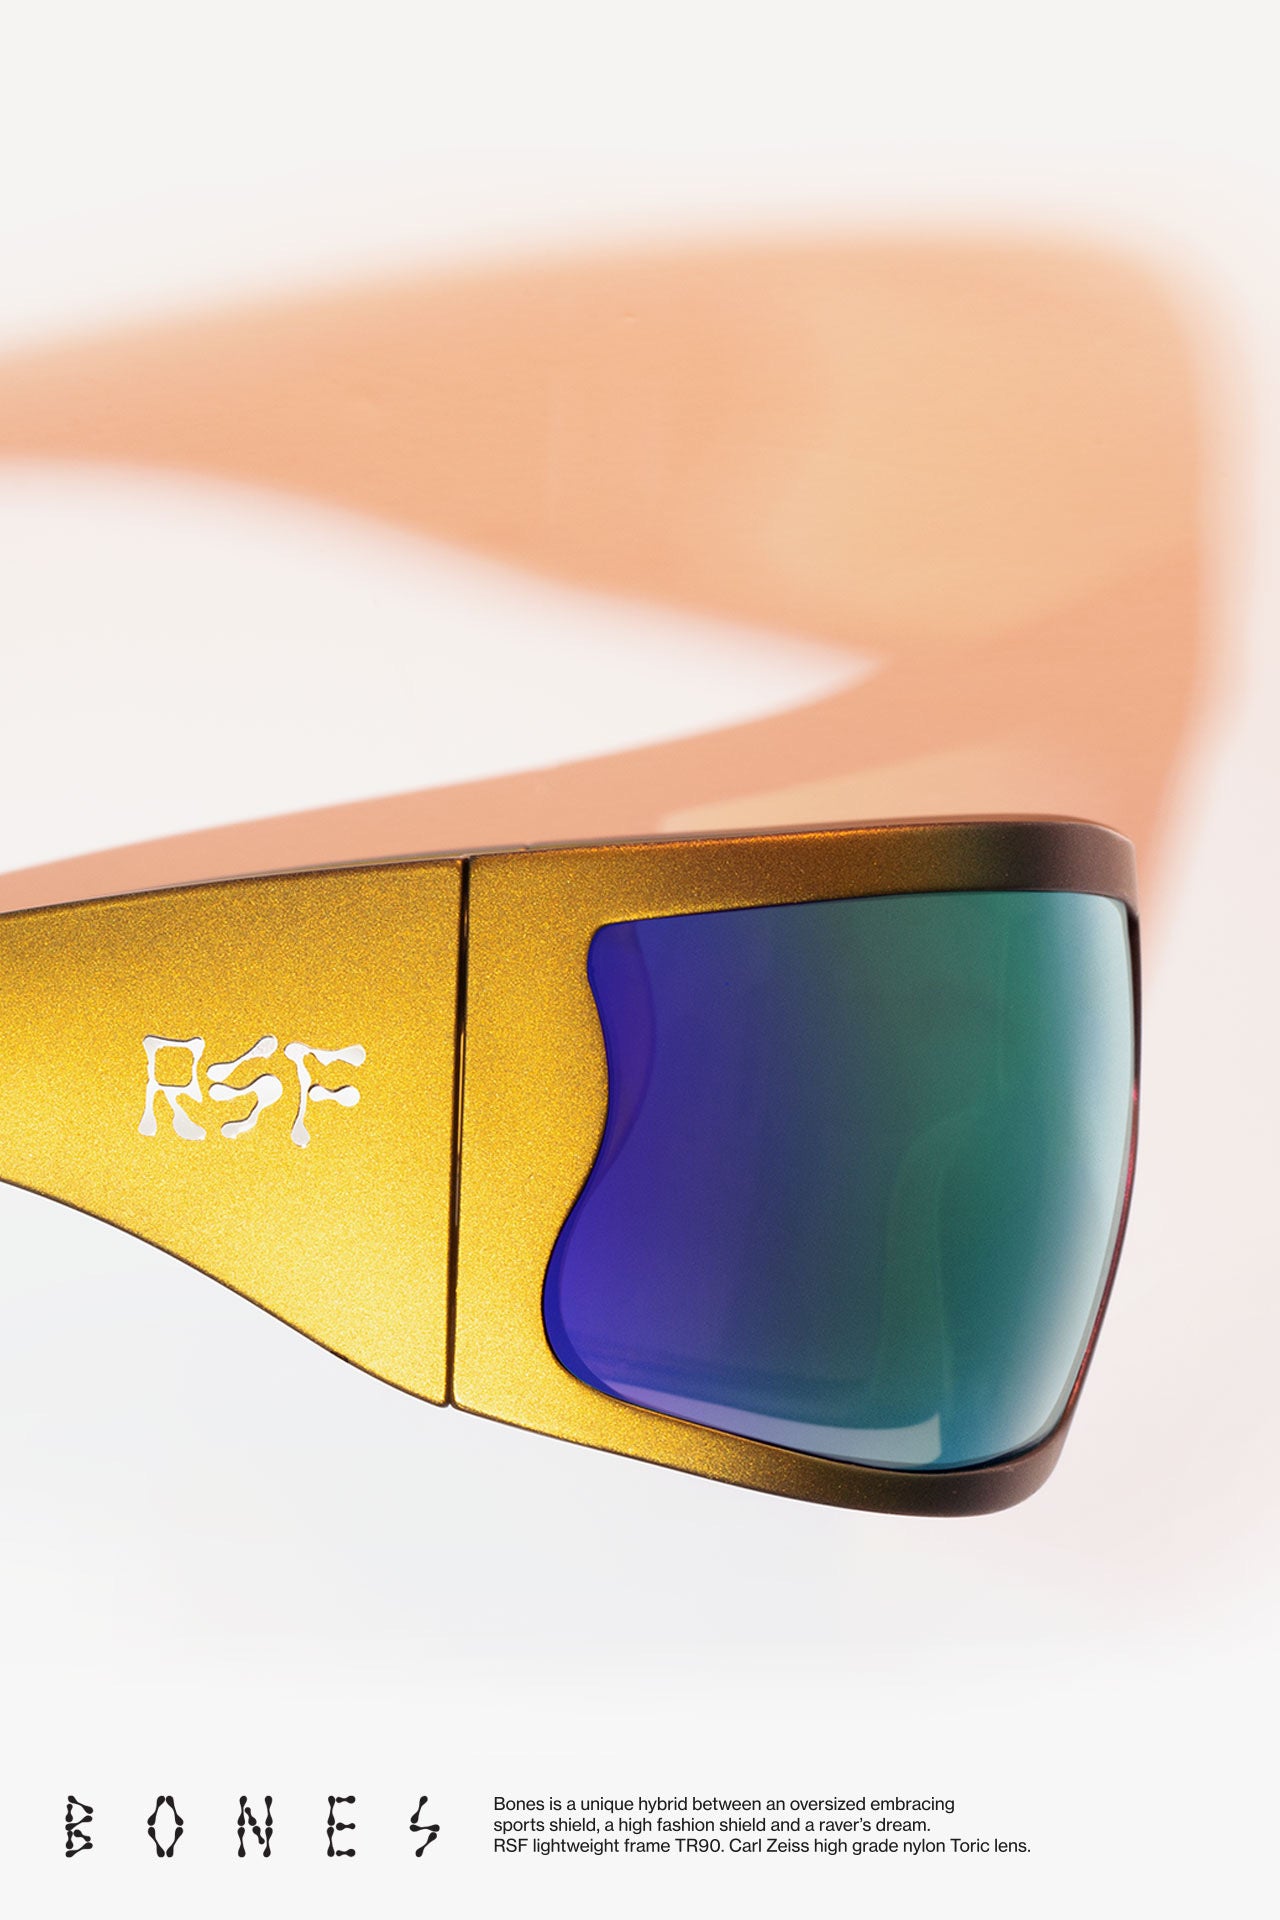 Retro Super Future Flat Top sunglasses at Paris Fashion Week